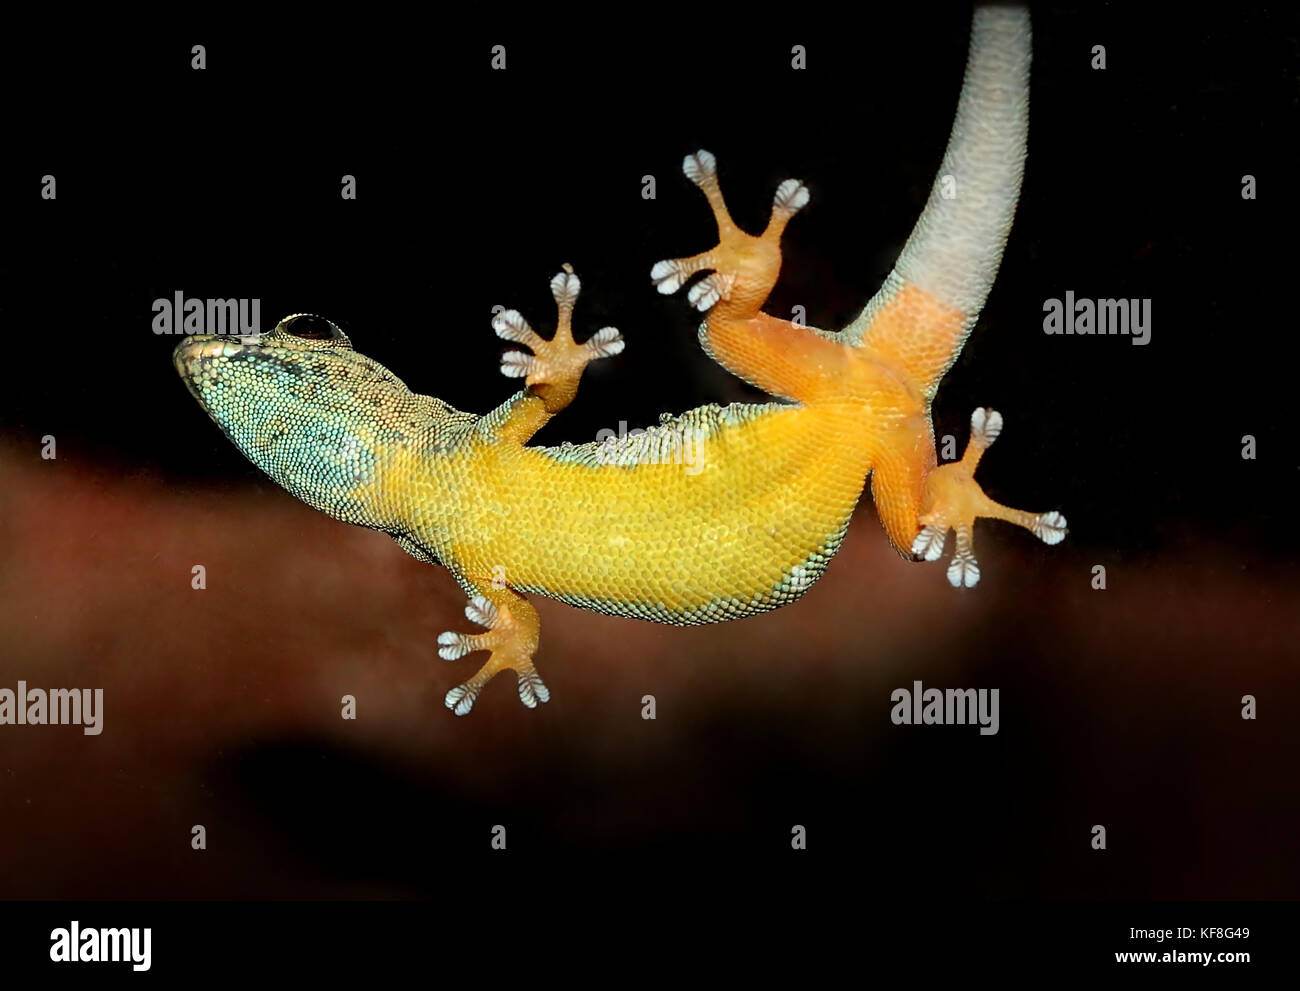 Geco enano turquesa de Tanzanía o William's dwarf gecko (Lygodactylus williamsi ) aferrarse al vidrio. A.k.a. Azul eléctrico Gecko Foto de stock